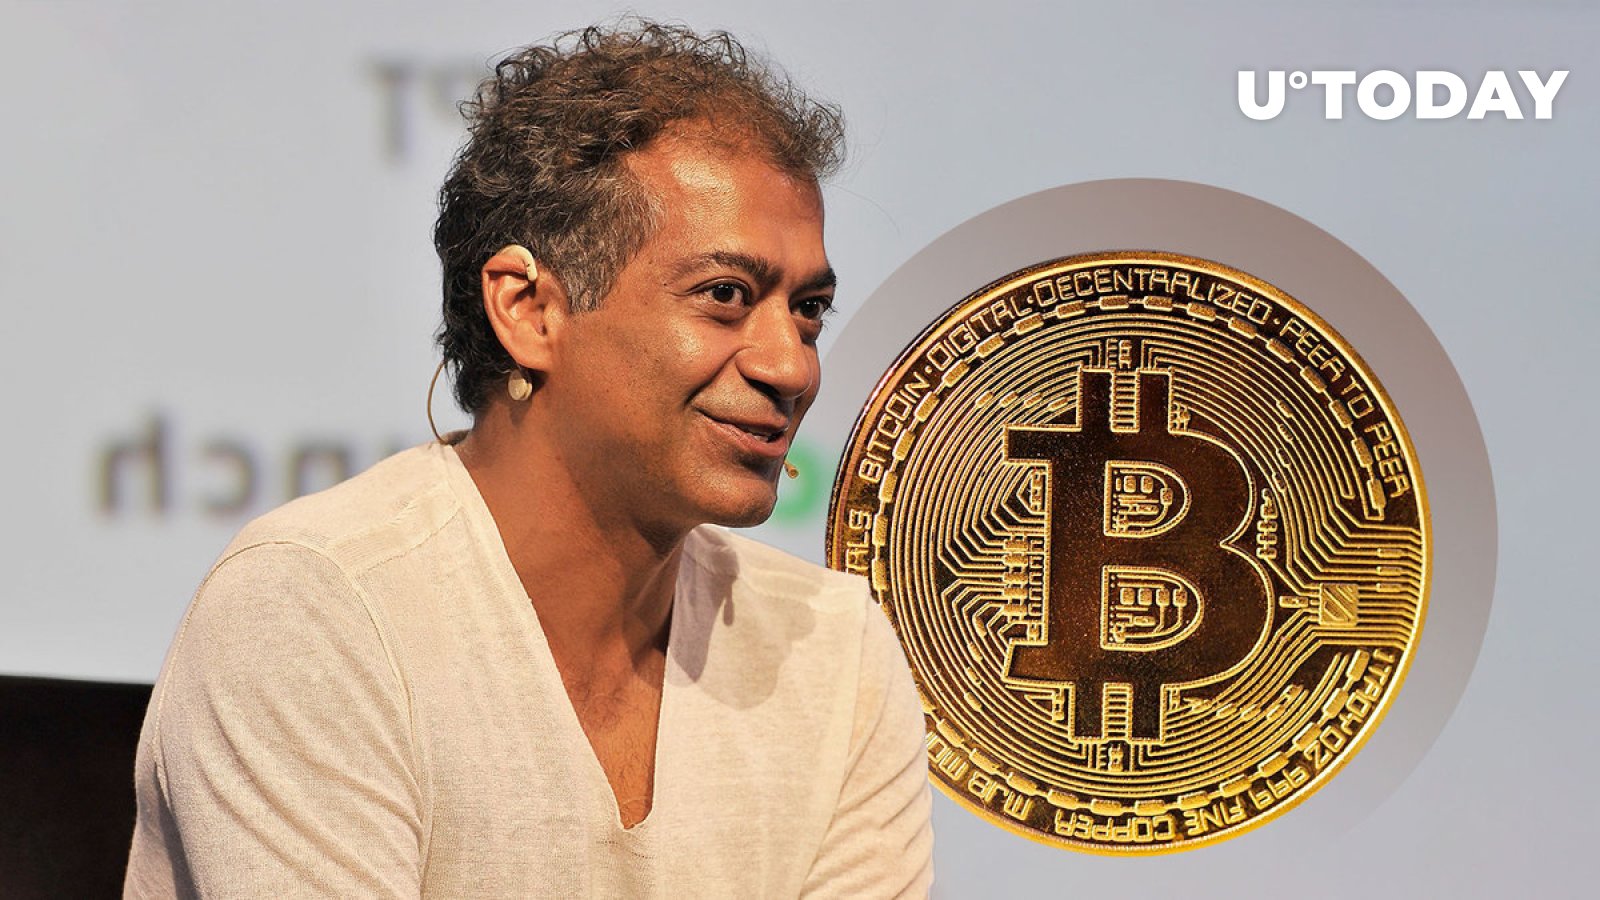 Twitter investor Naval Ravikant calls Bitcoin (BTC) a true store of value